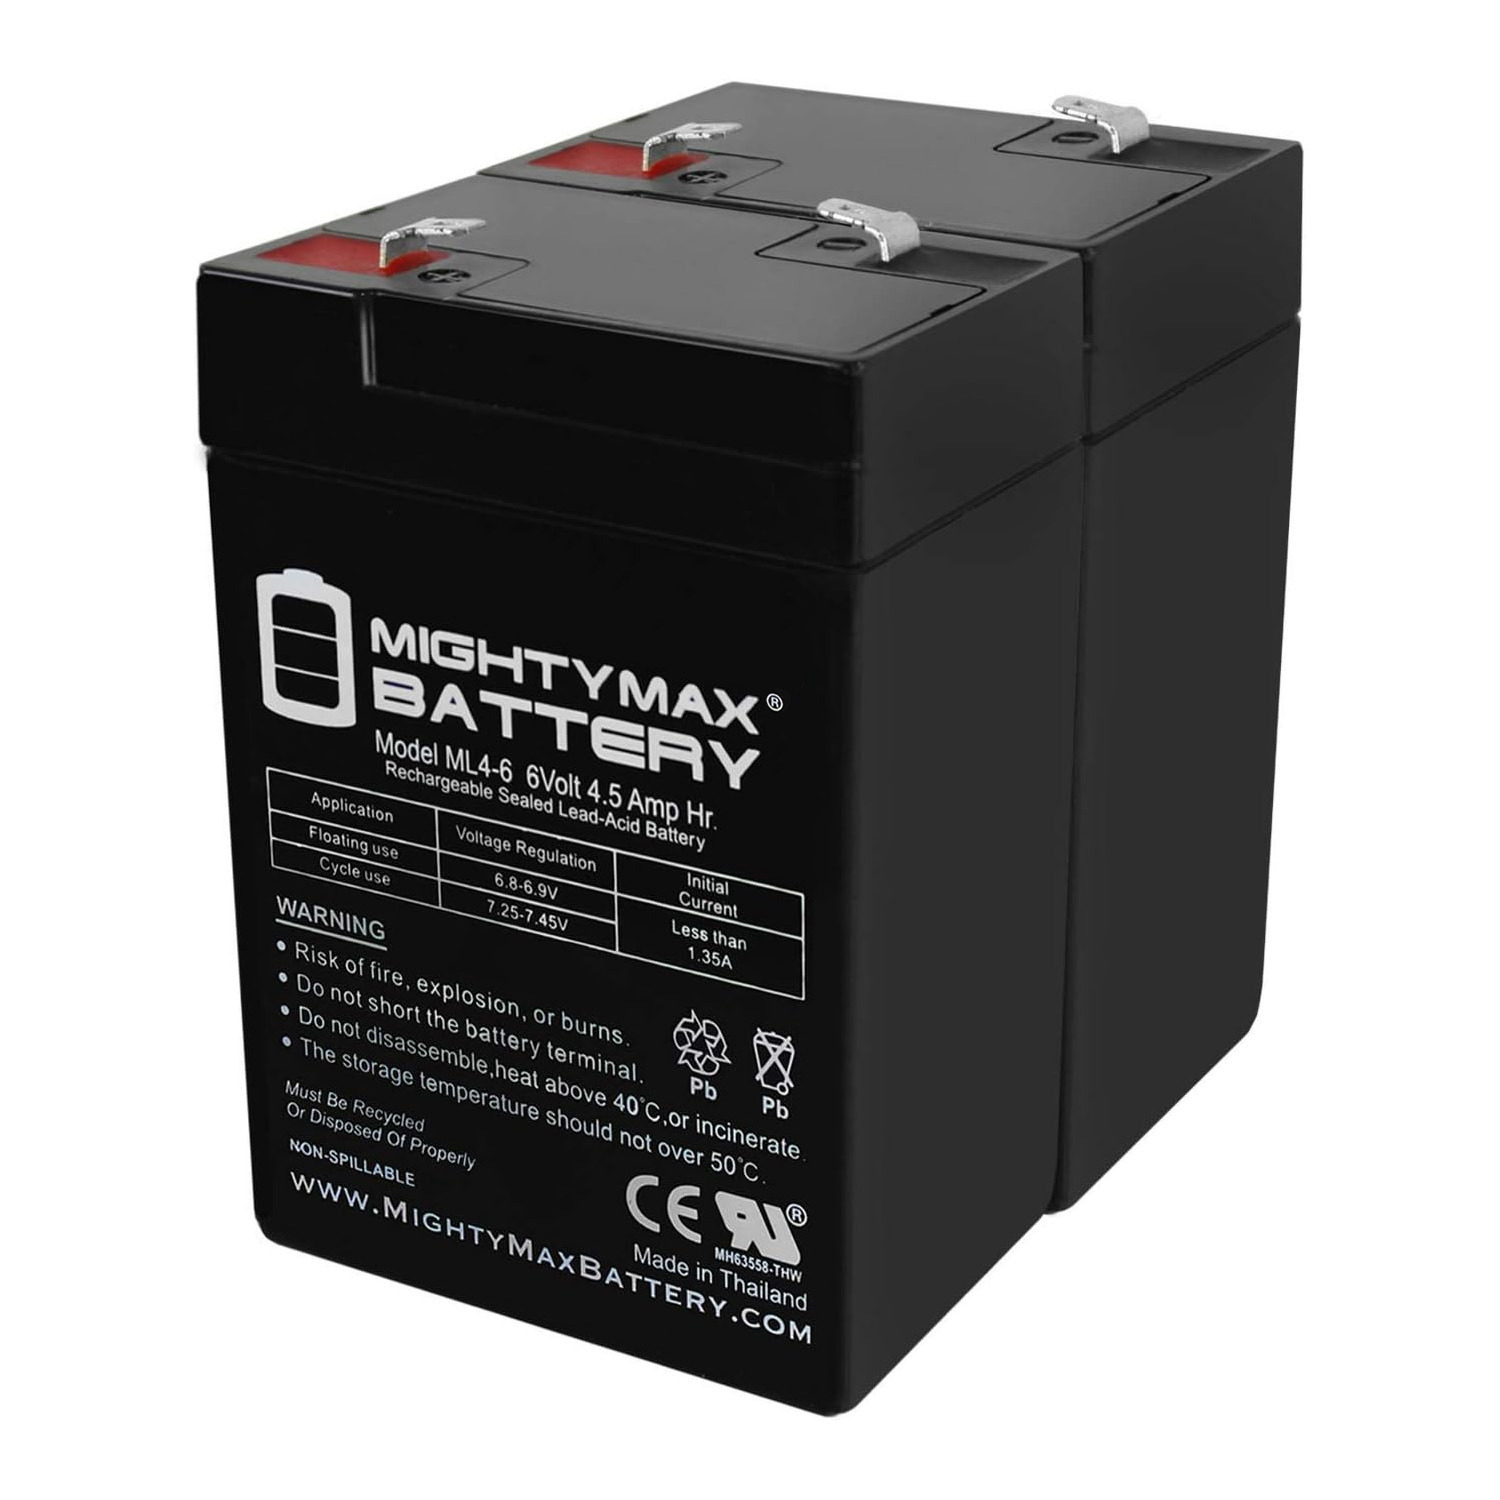 6V 4.5AH SLA Replacement Battery for Emergi-Lite 6M1 - 2 Pack